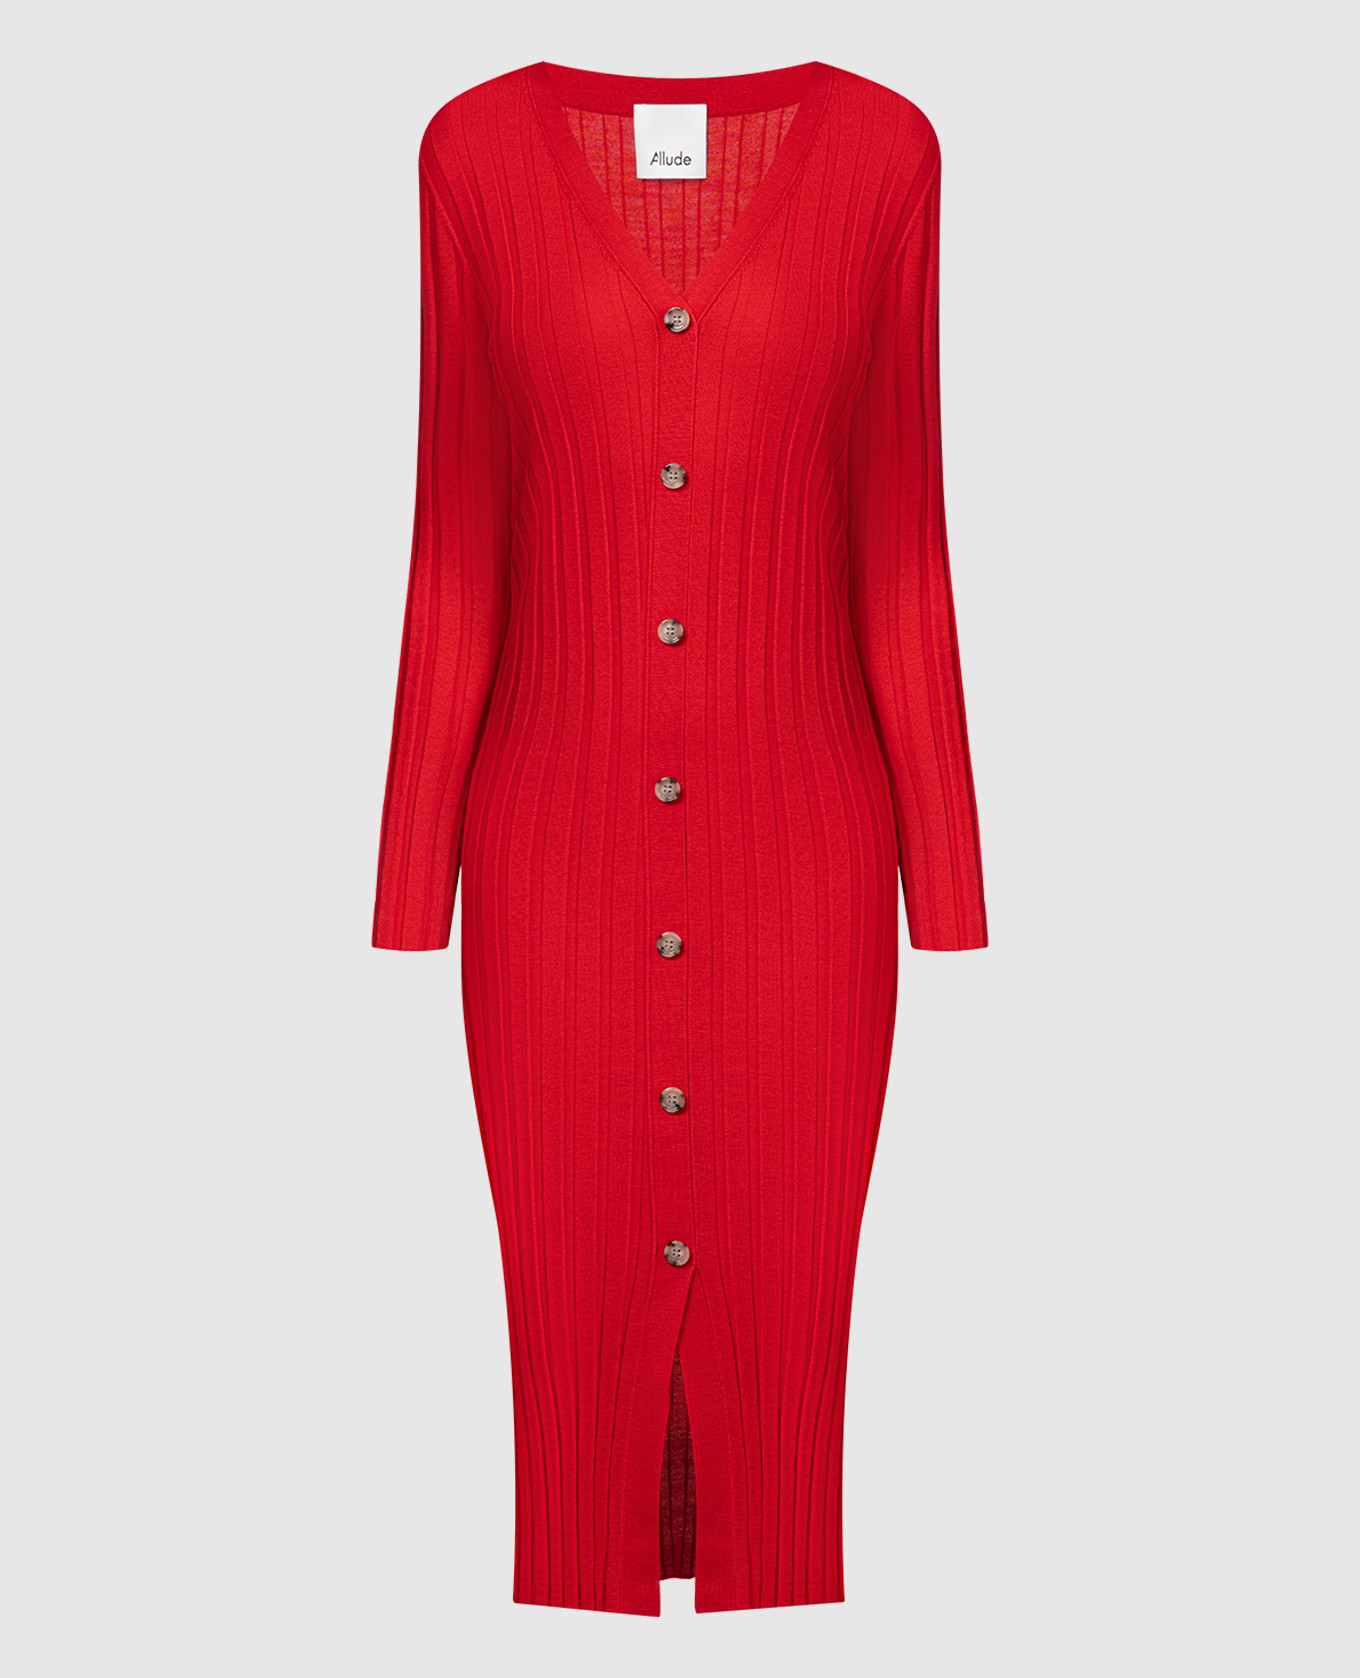 Red midi dress made of wool